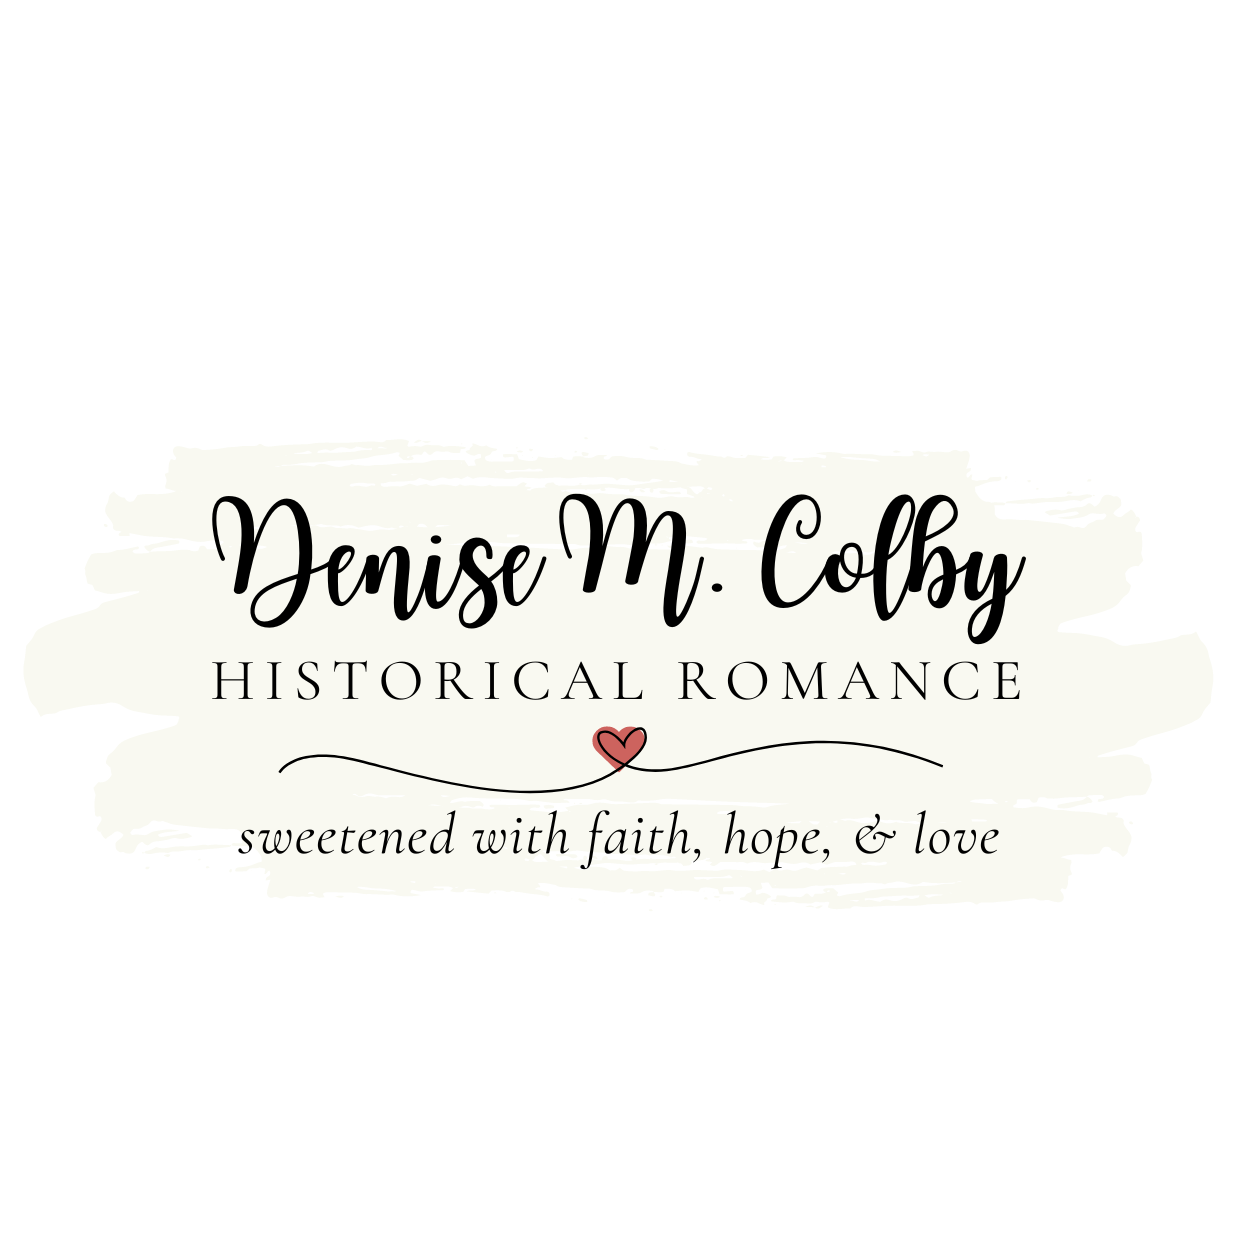 Denise M. Colby Historical Romance sweetened with faith, hope, & love logo